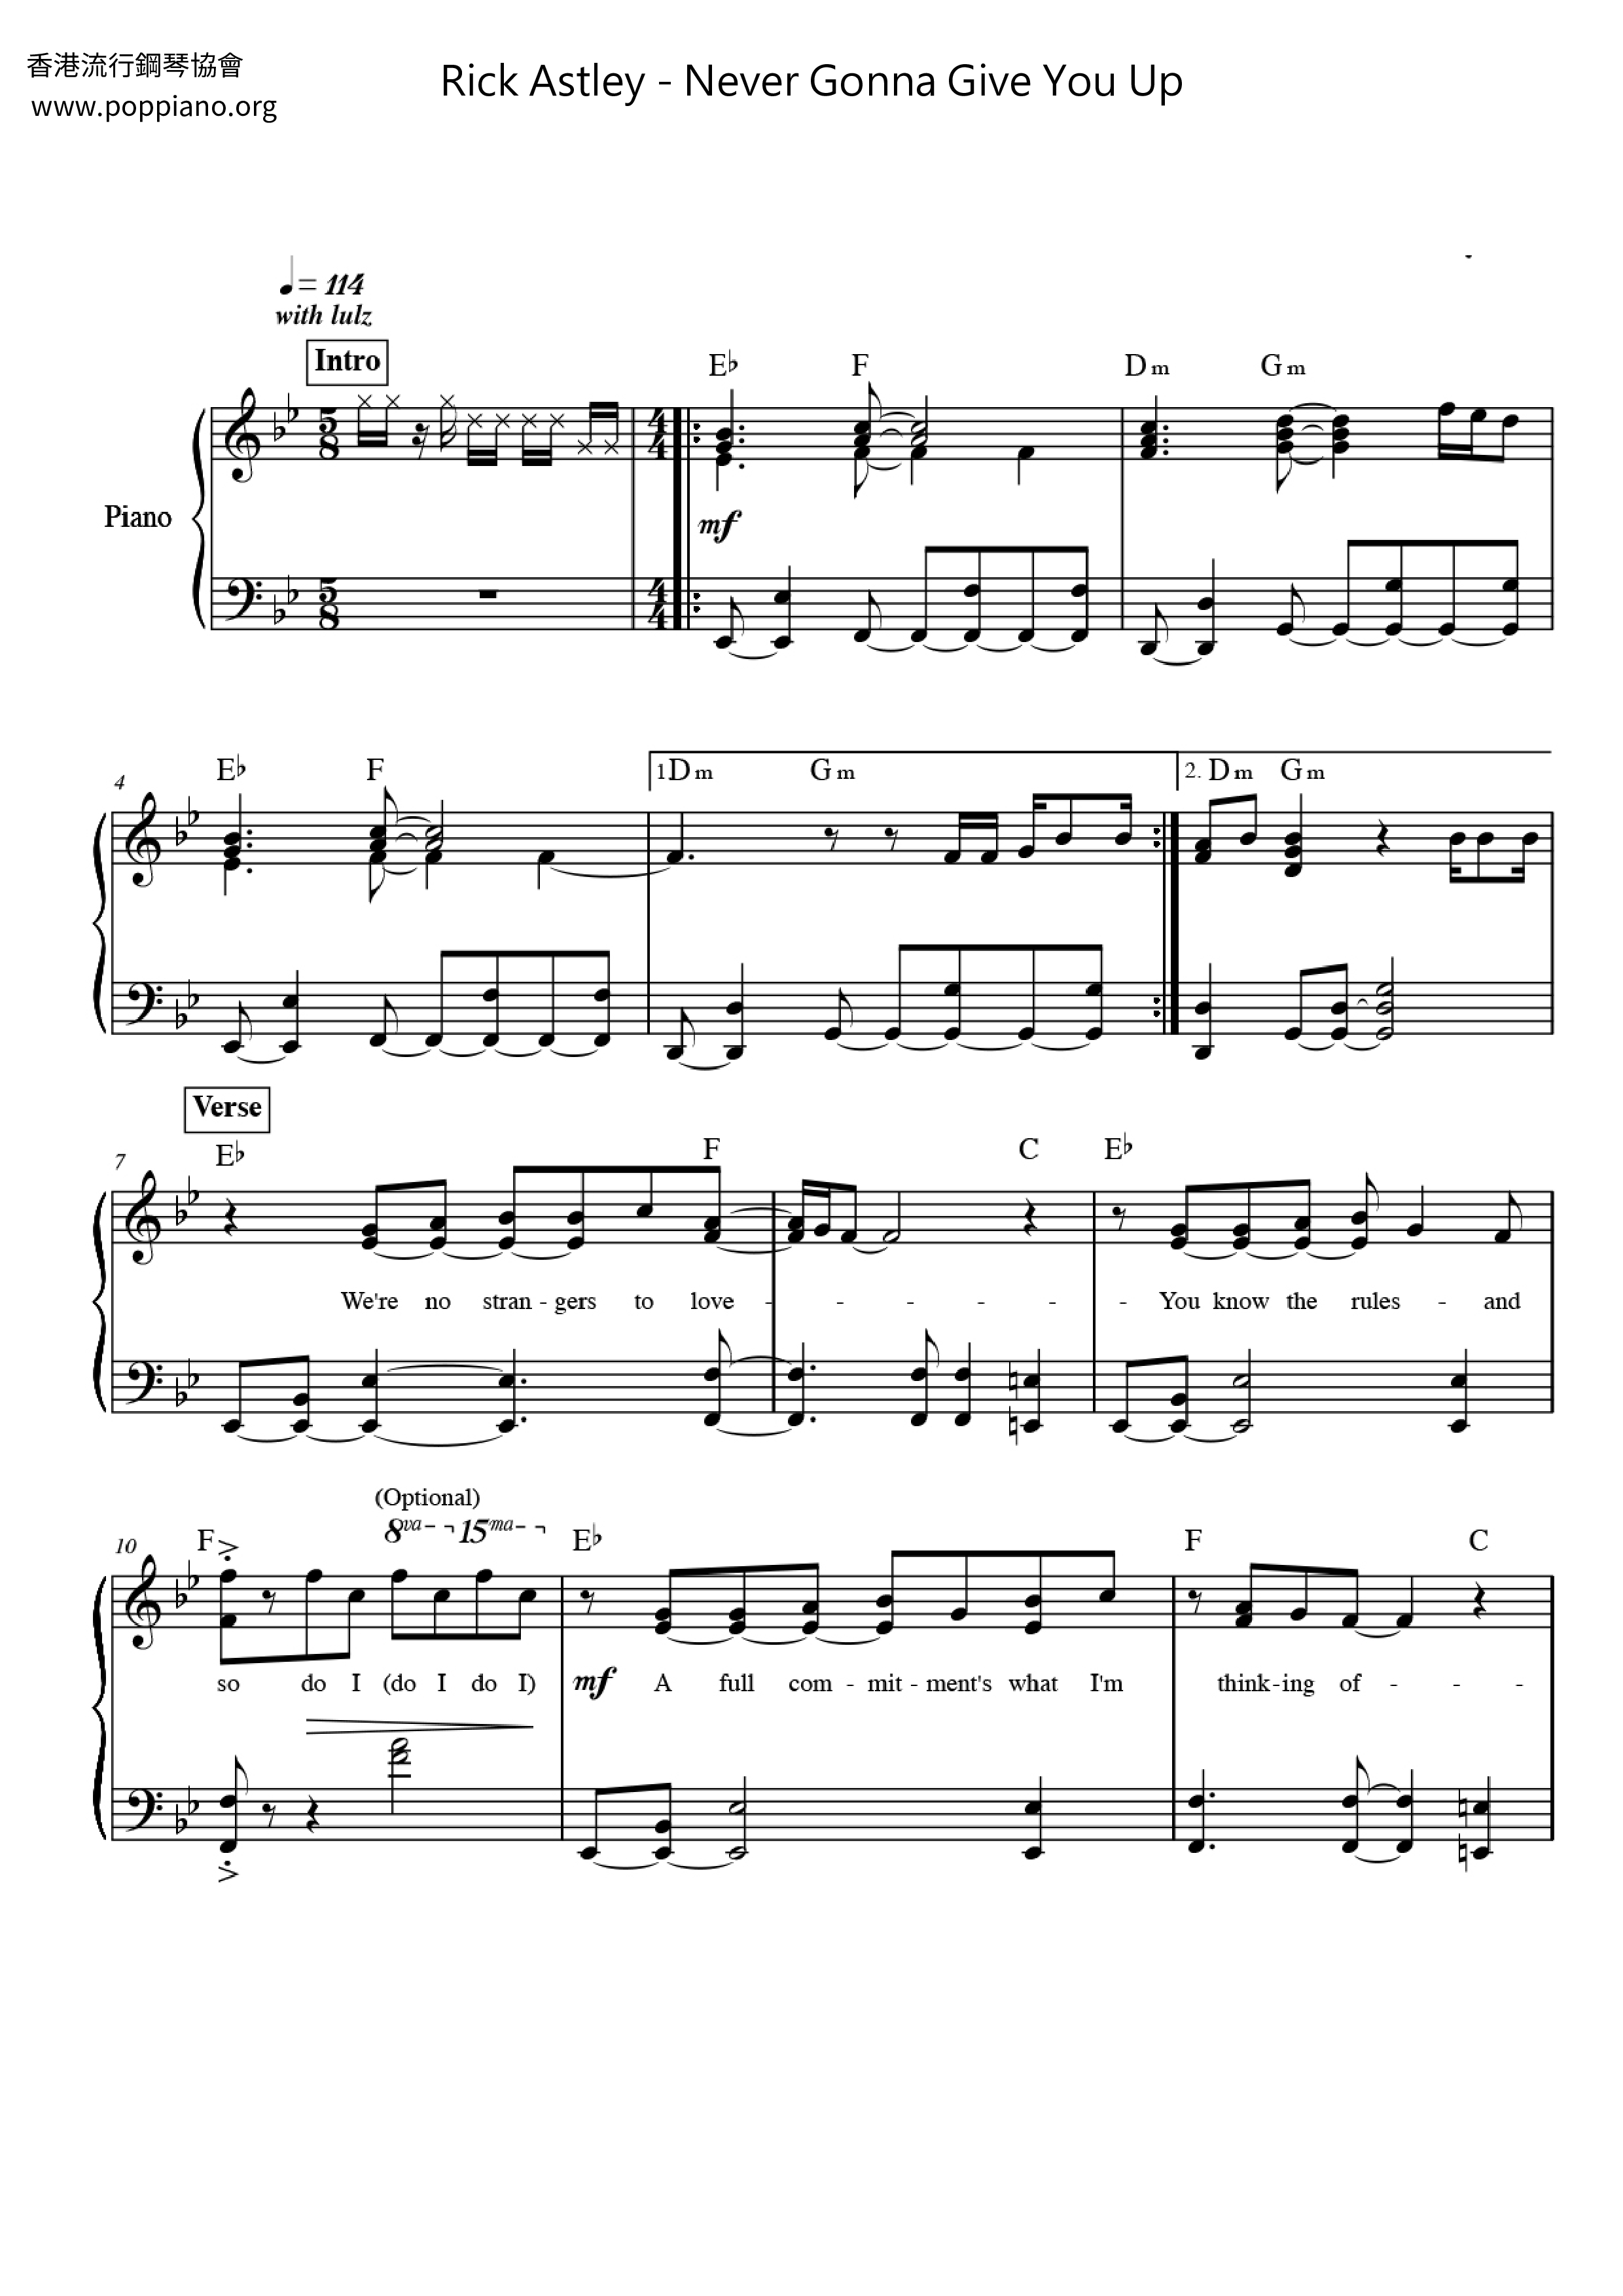 Tekst Never Gonna Give You Up Rick Astley-Never Gonna Give You Up Sheet Music pdf, - Free Score